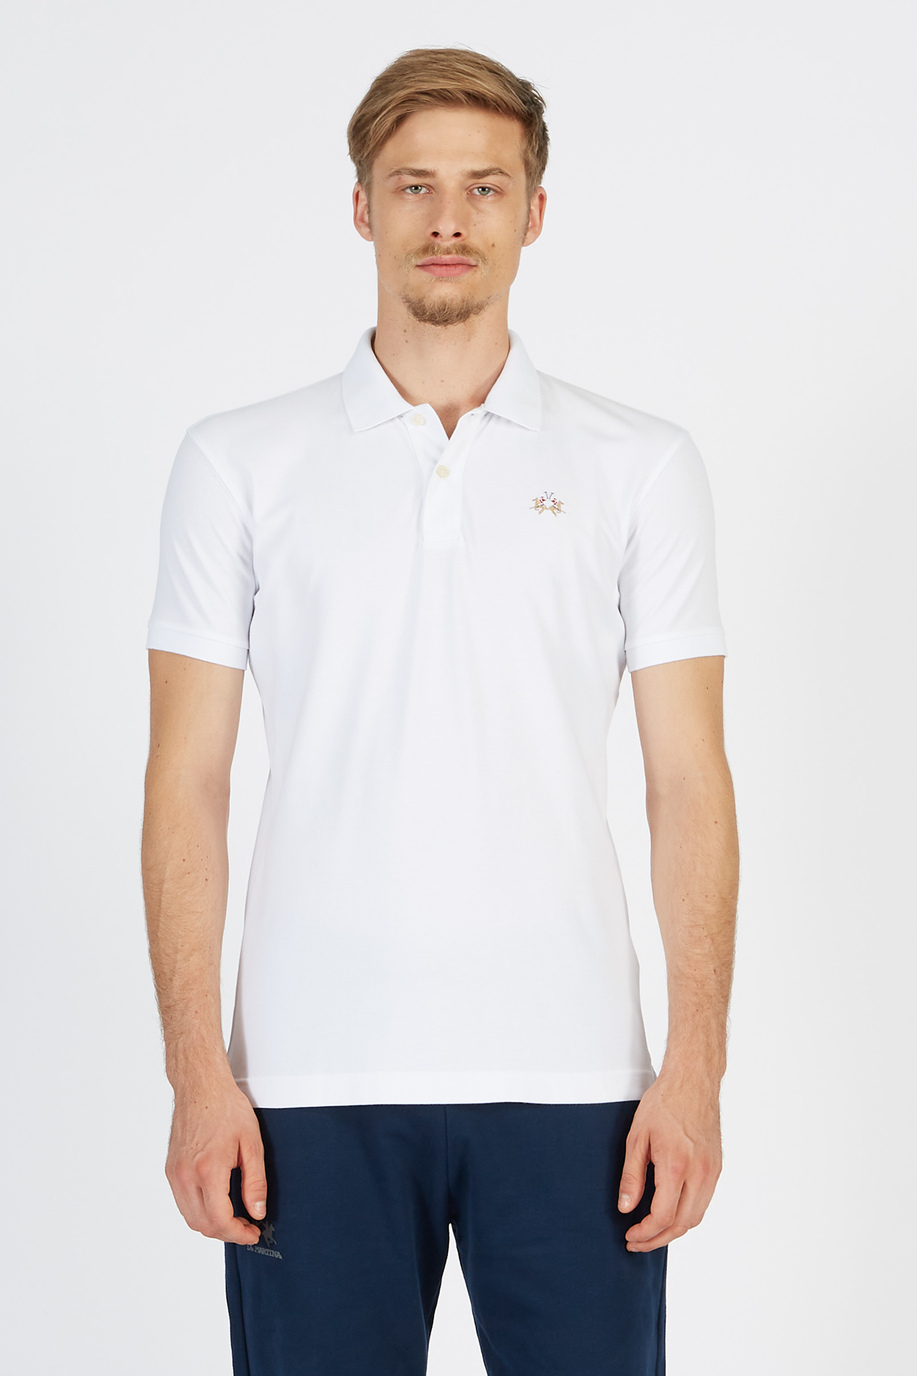 Herren-Poloshirt Slim Fit - Eduardo - Klassische Basics | La Martina - Official Online Shop